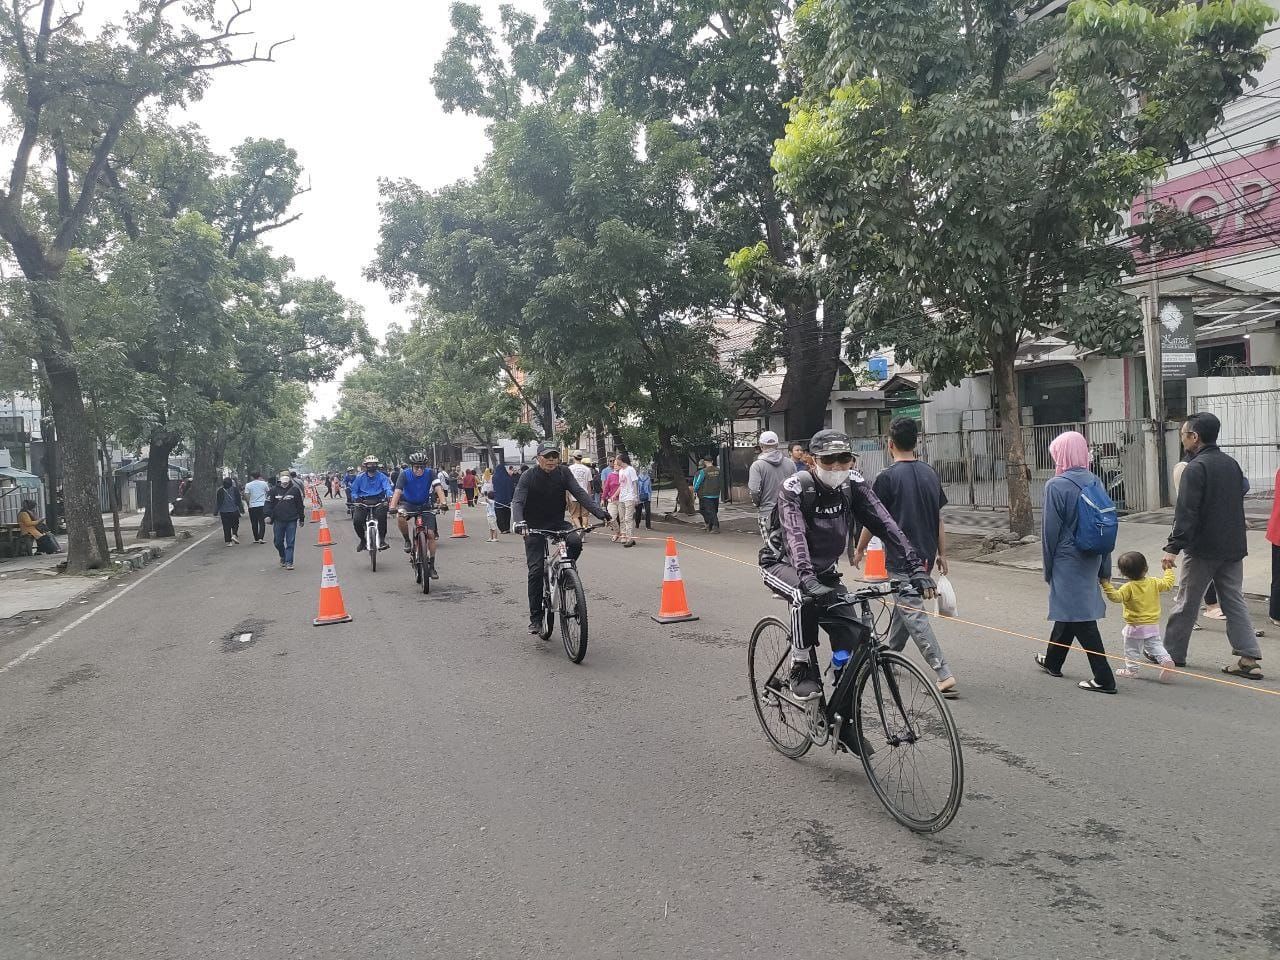 Akhirnya Pemkot Bandung Hadirkan Kembali Car Free Day Buahbatu, Warga Sambut Antusias! 